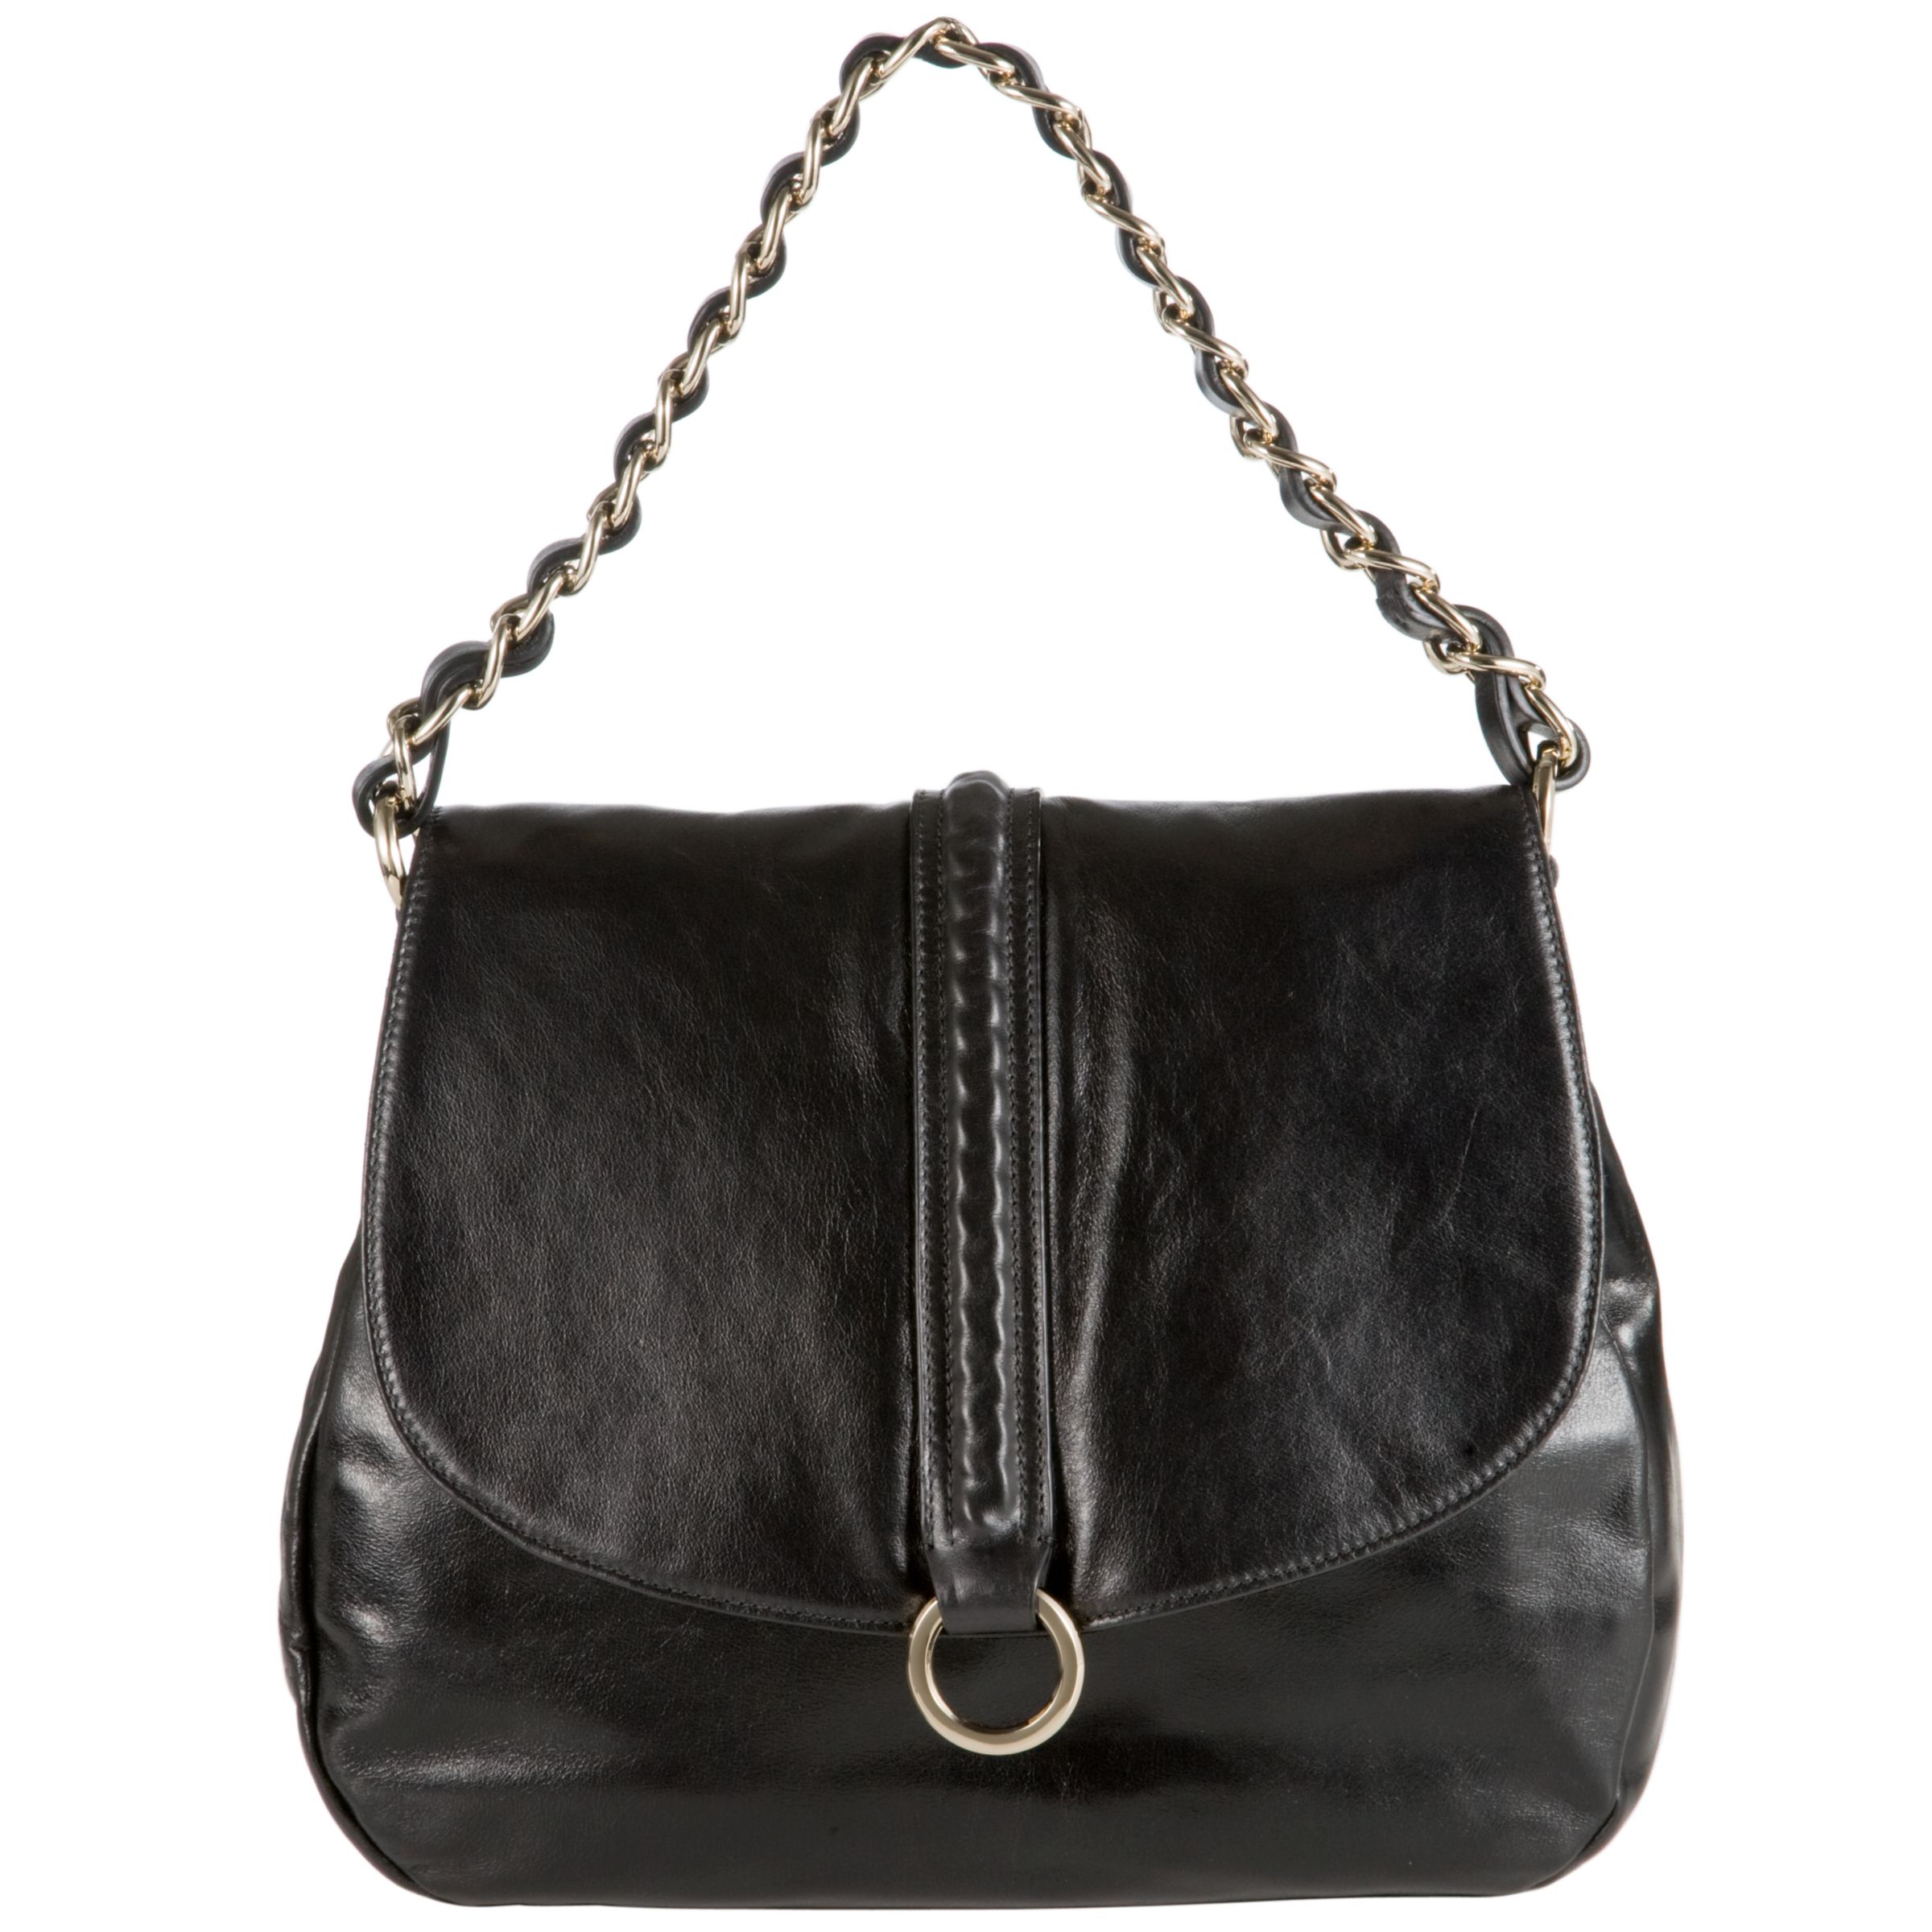 Coccinelle Greta Chain Detail Across Body Handbag, Black at JohnLewis